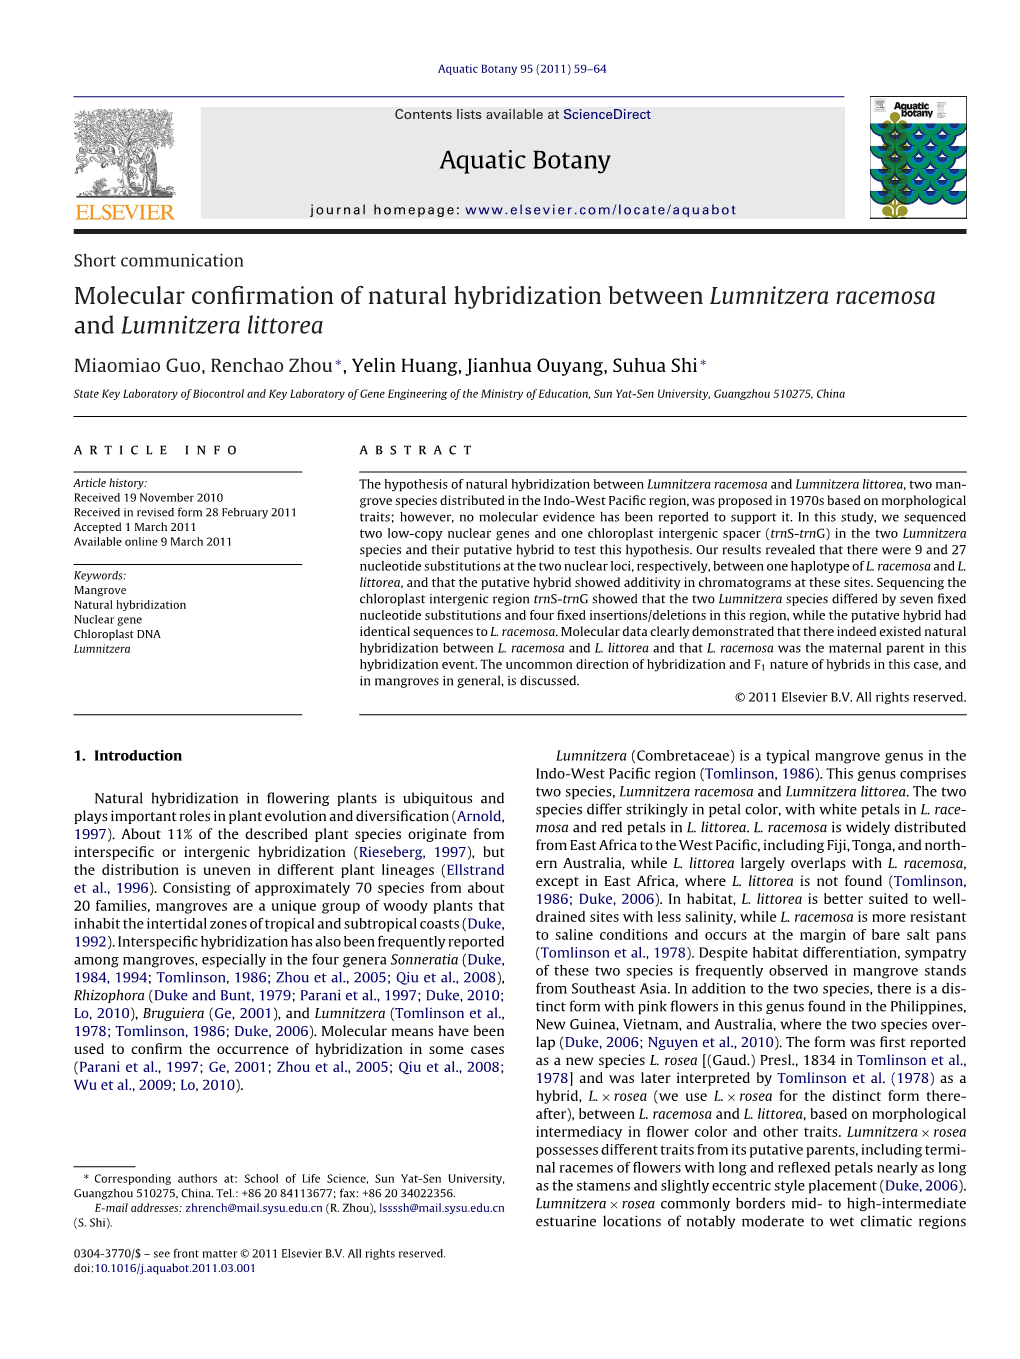 Molecular Confirmation of Natural Hybridization Between Lumnitzera